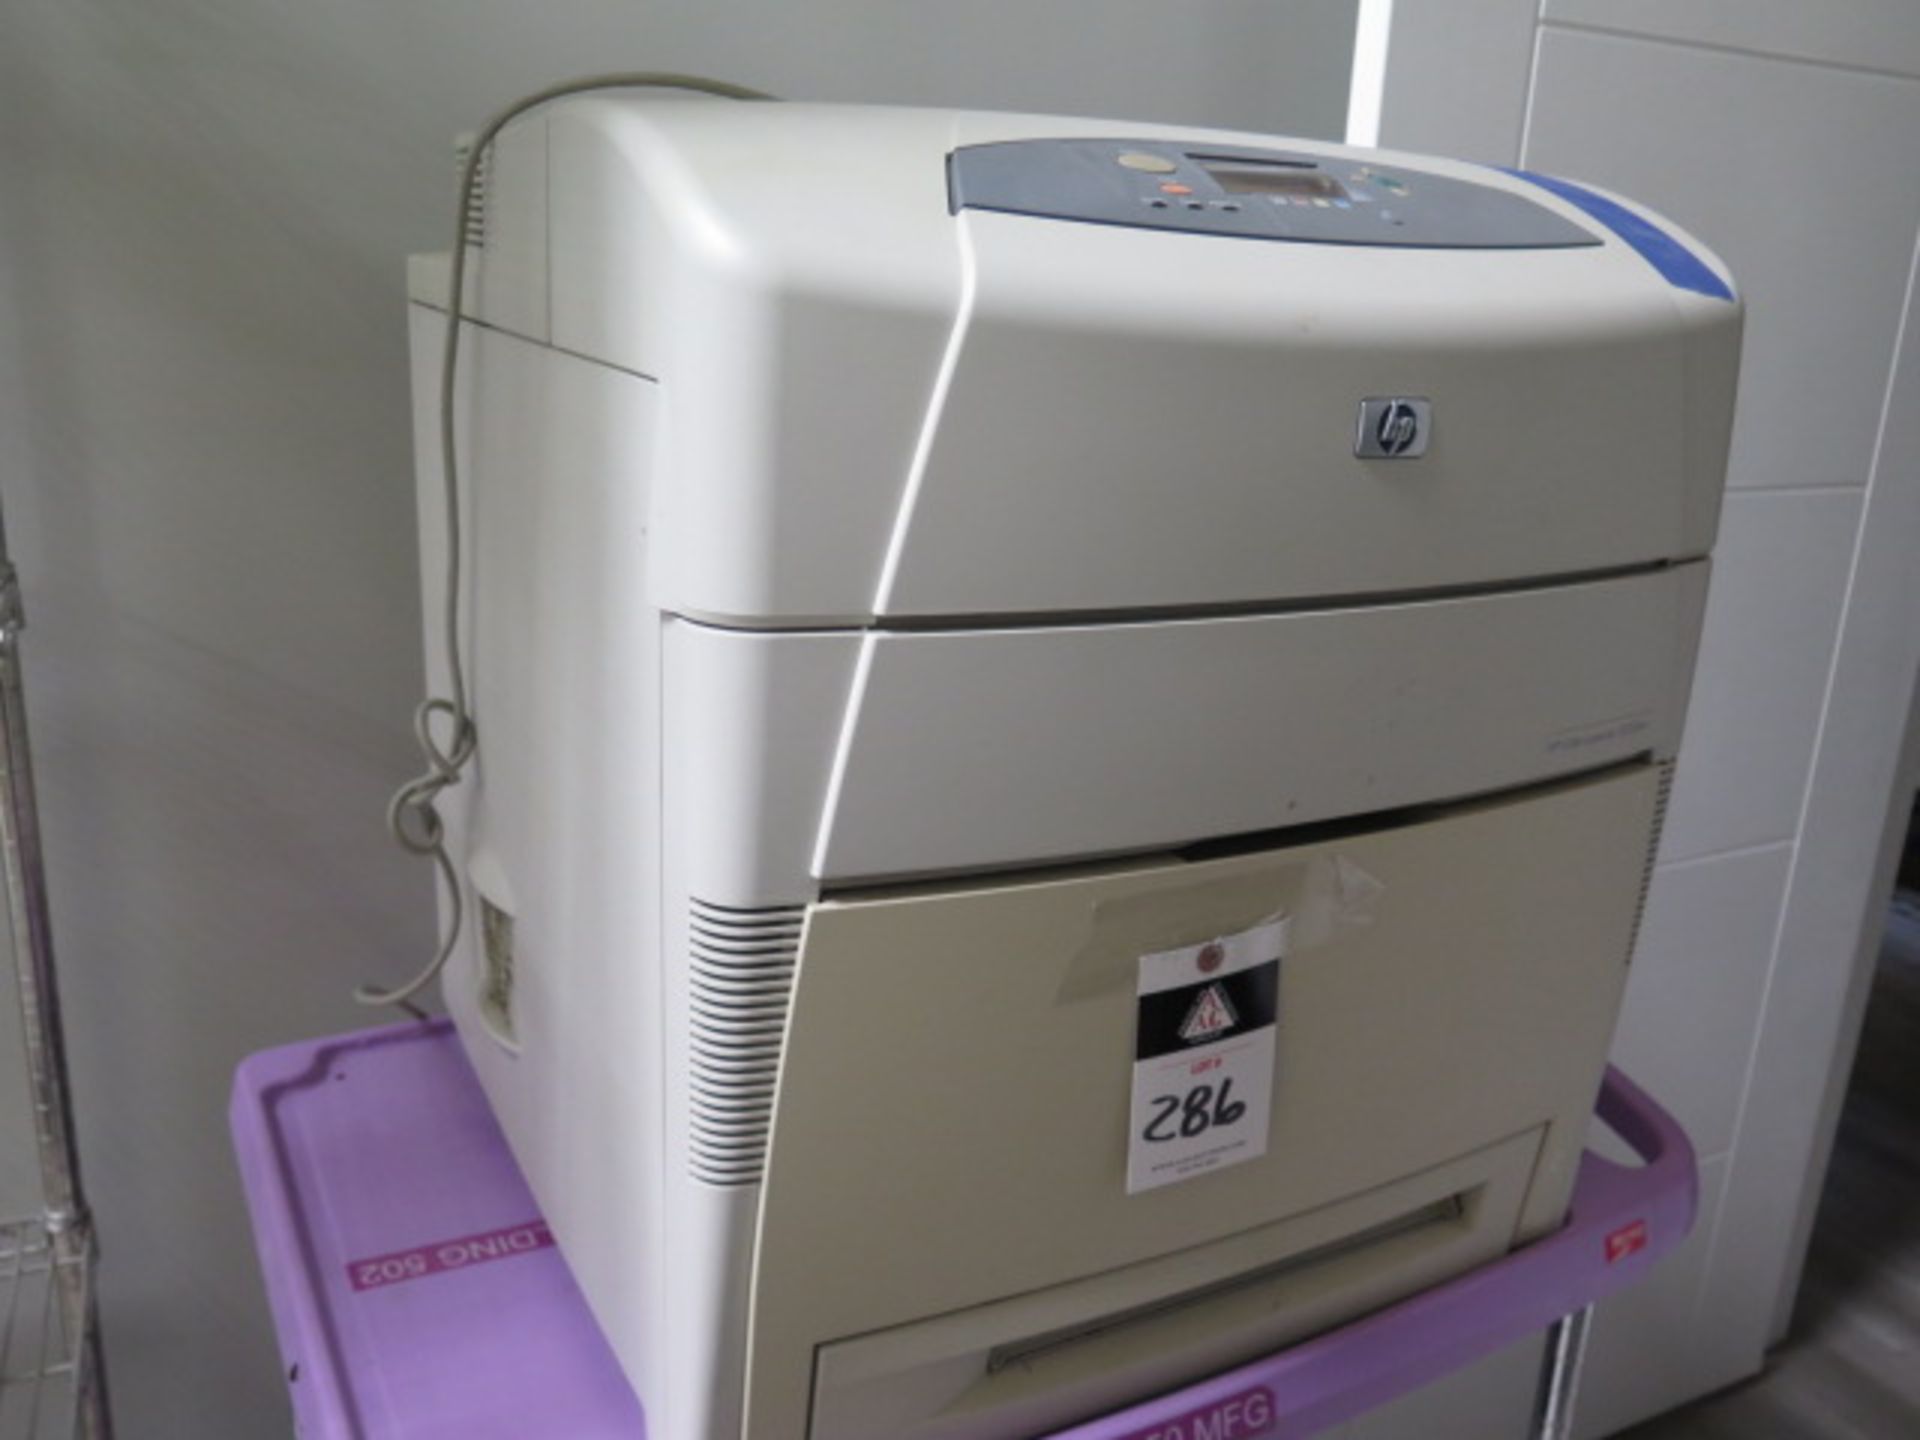 Hewlett Packard Color LaserJet 5550dn Color Printer (SOLD AS-IS - NO WARRANTY)